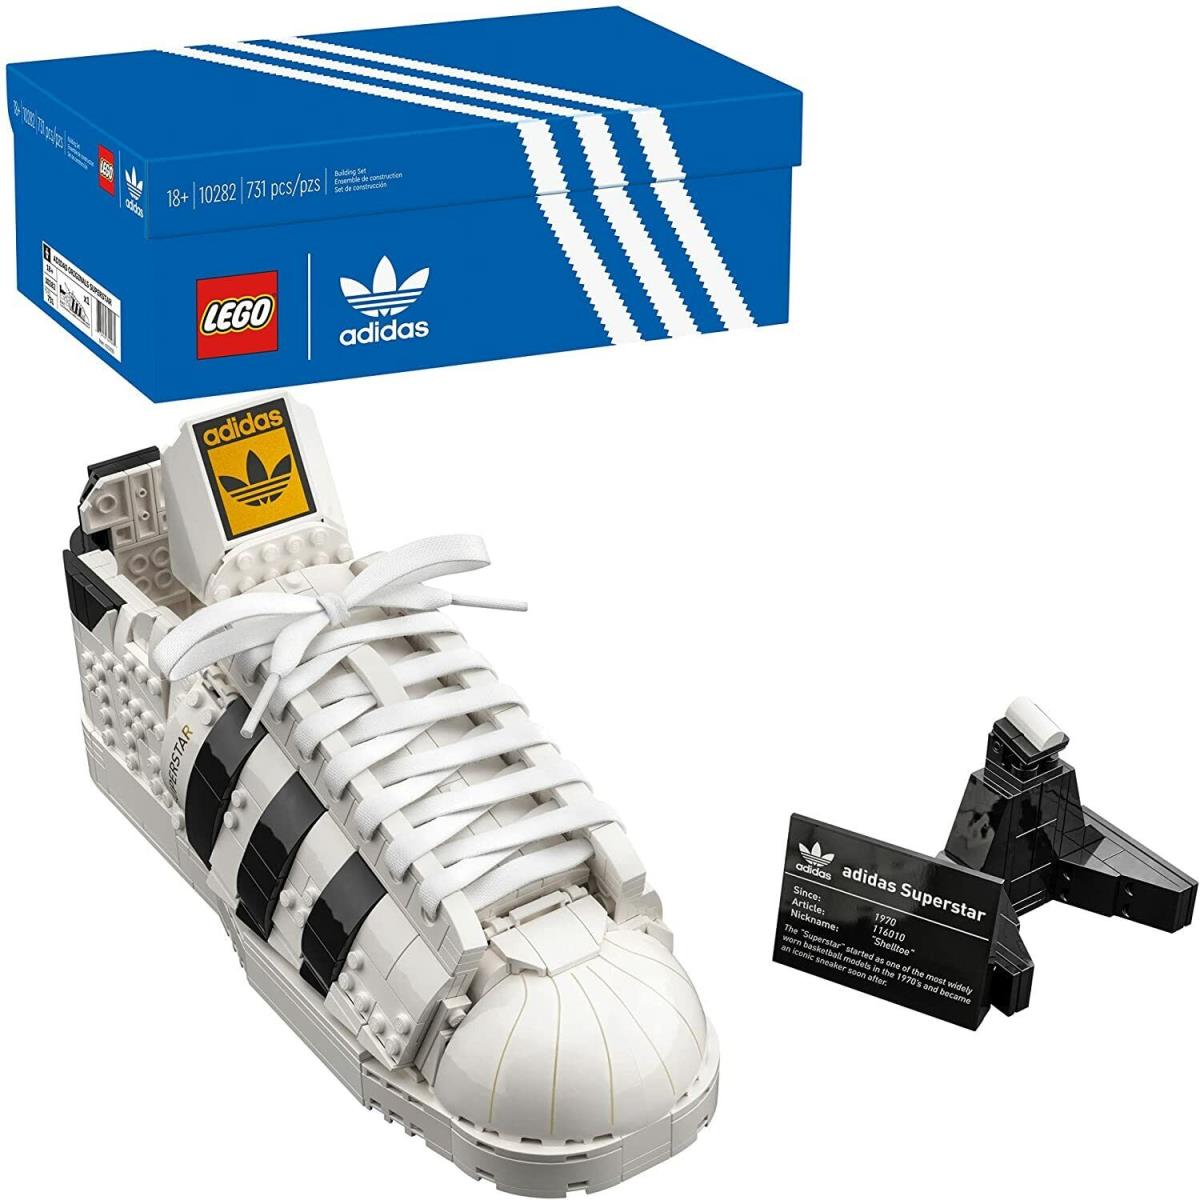 Lego 10282 Adidas Originals Superstar 731 Pieces in Retail Box